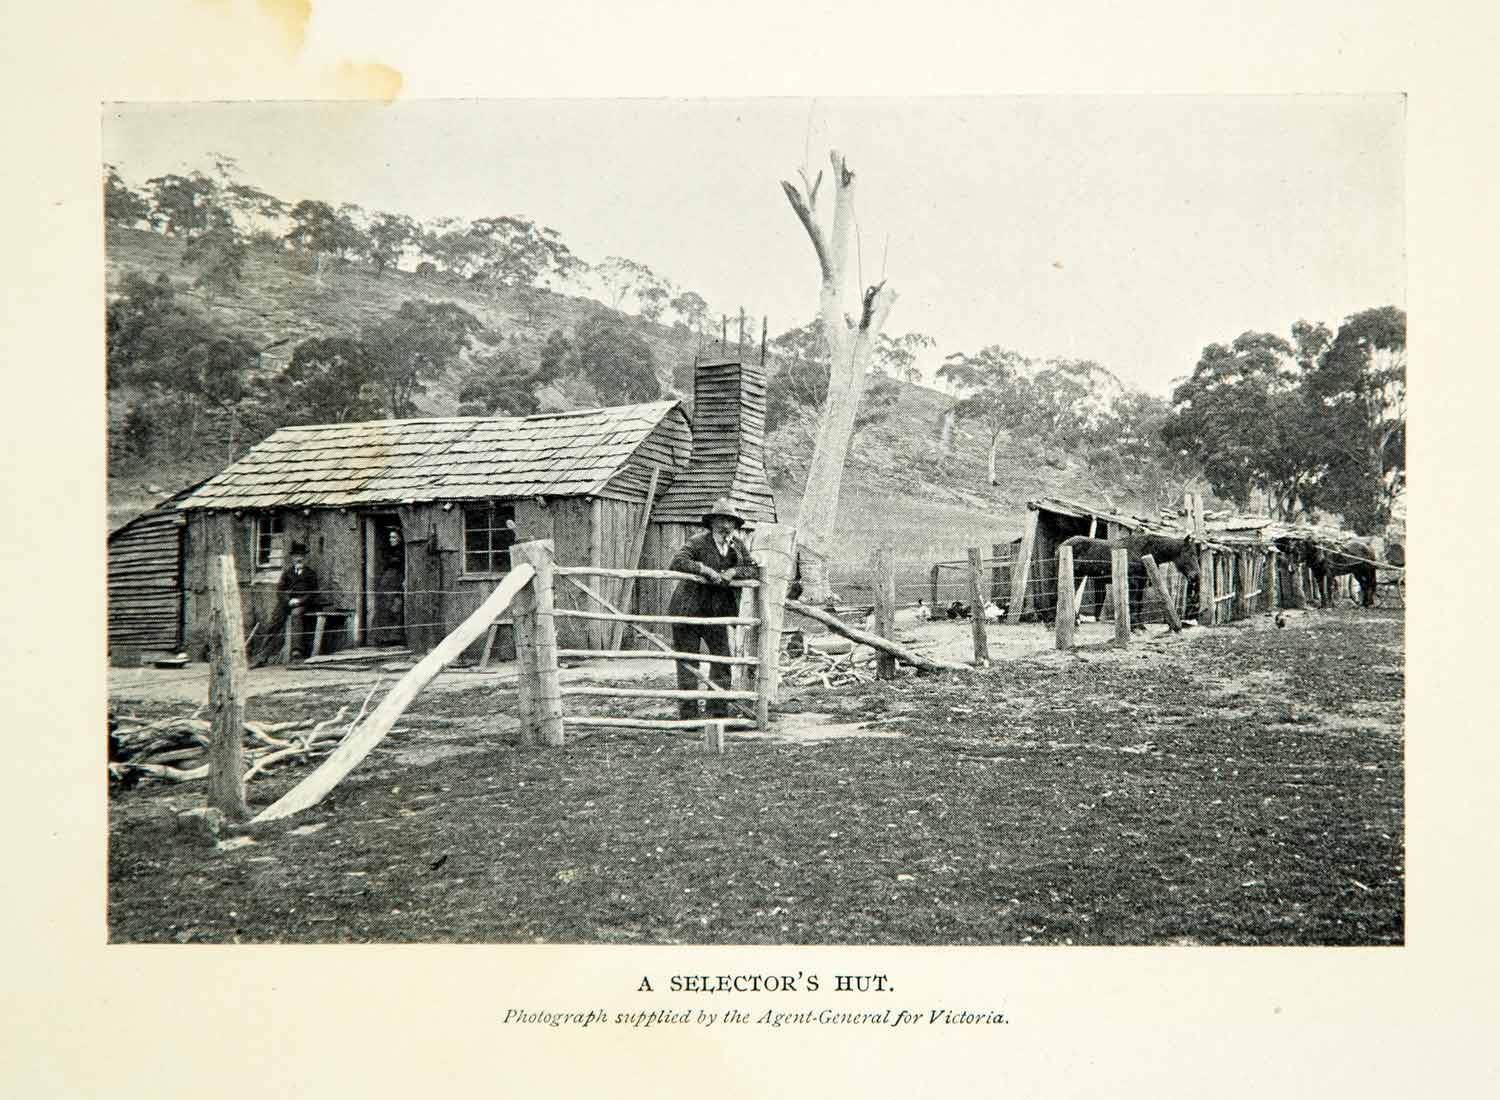 1910 Print Selector's Hut Australian Historical Image Land Victoria XGHD8